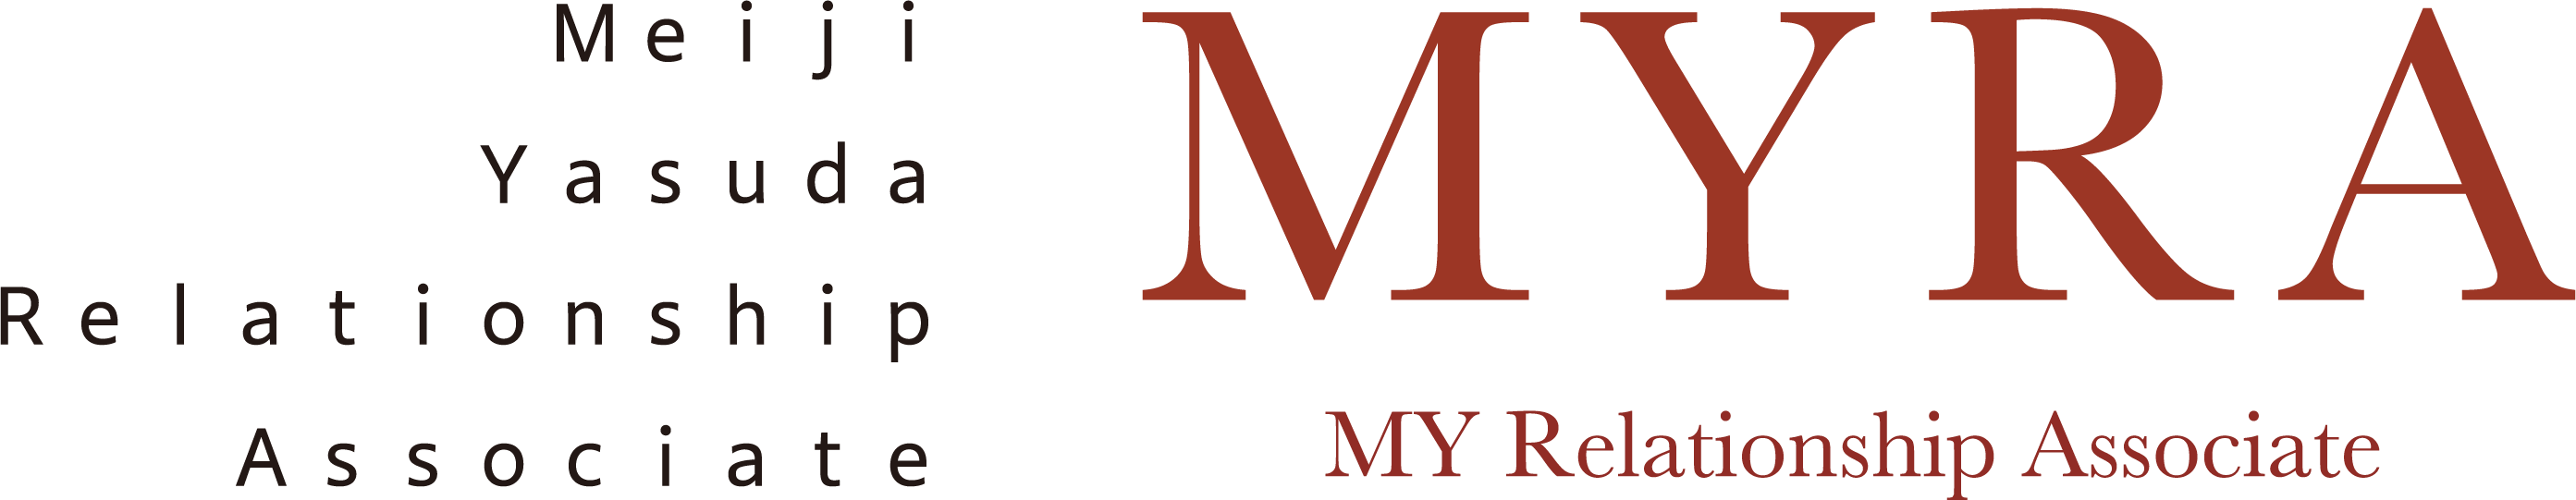 Meitji Yasuda Relationship Associate:MYRA MY Relationship Associate